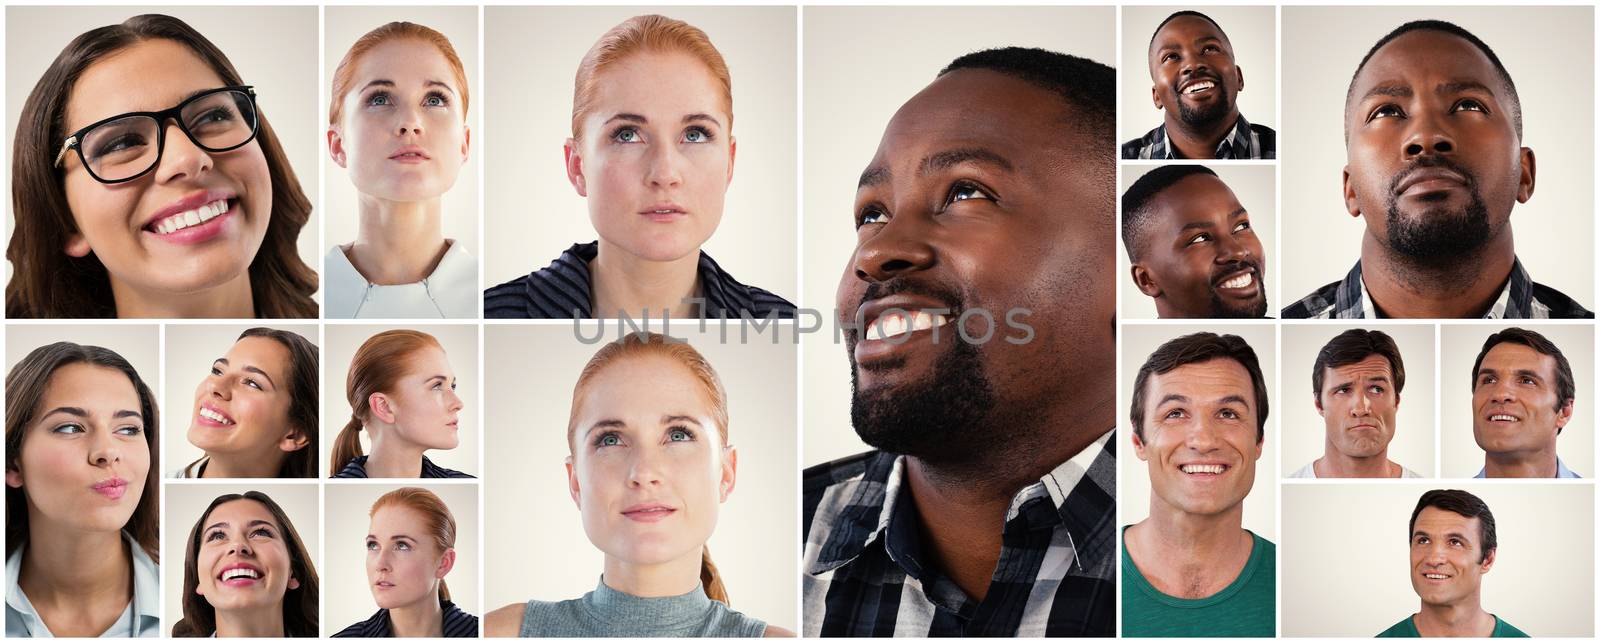 People collage portrait 6x2 by Wavebreakmedia